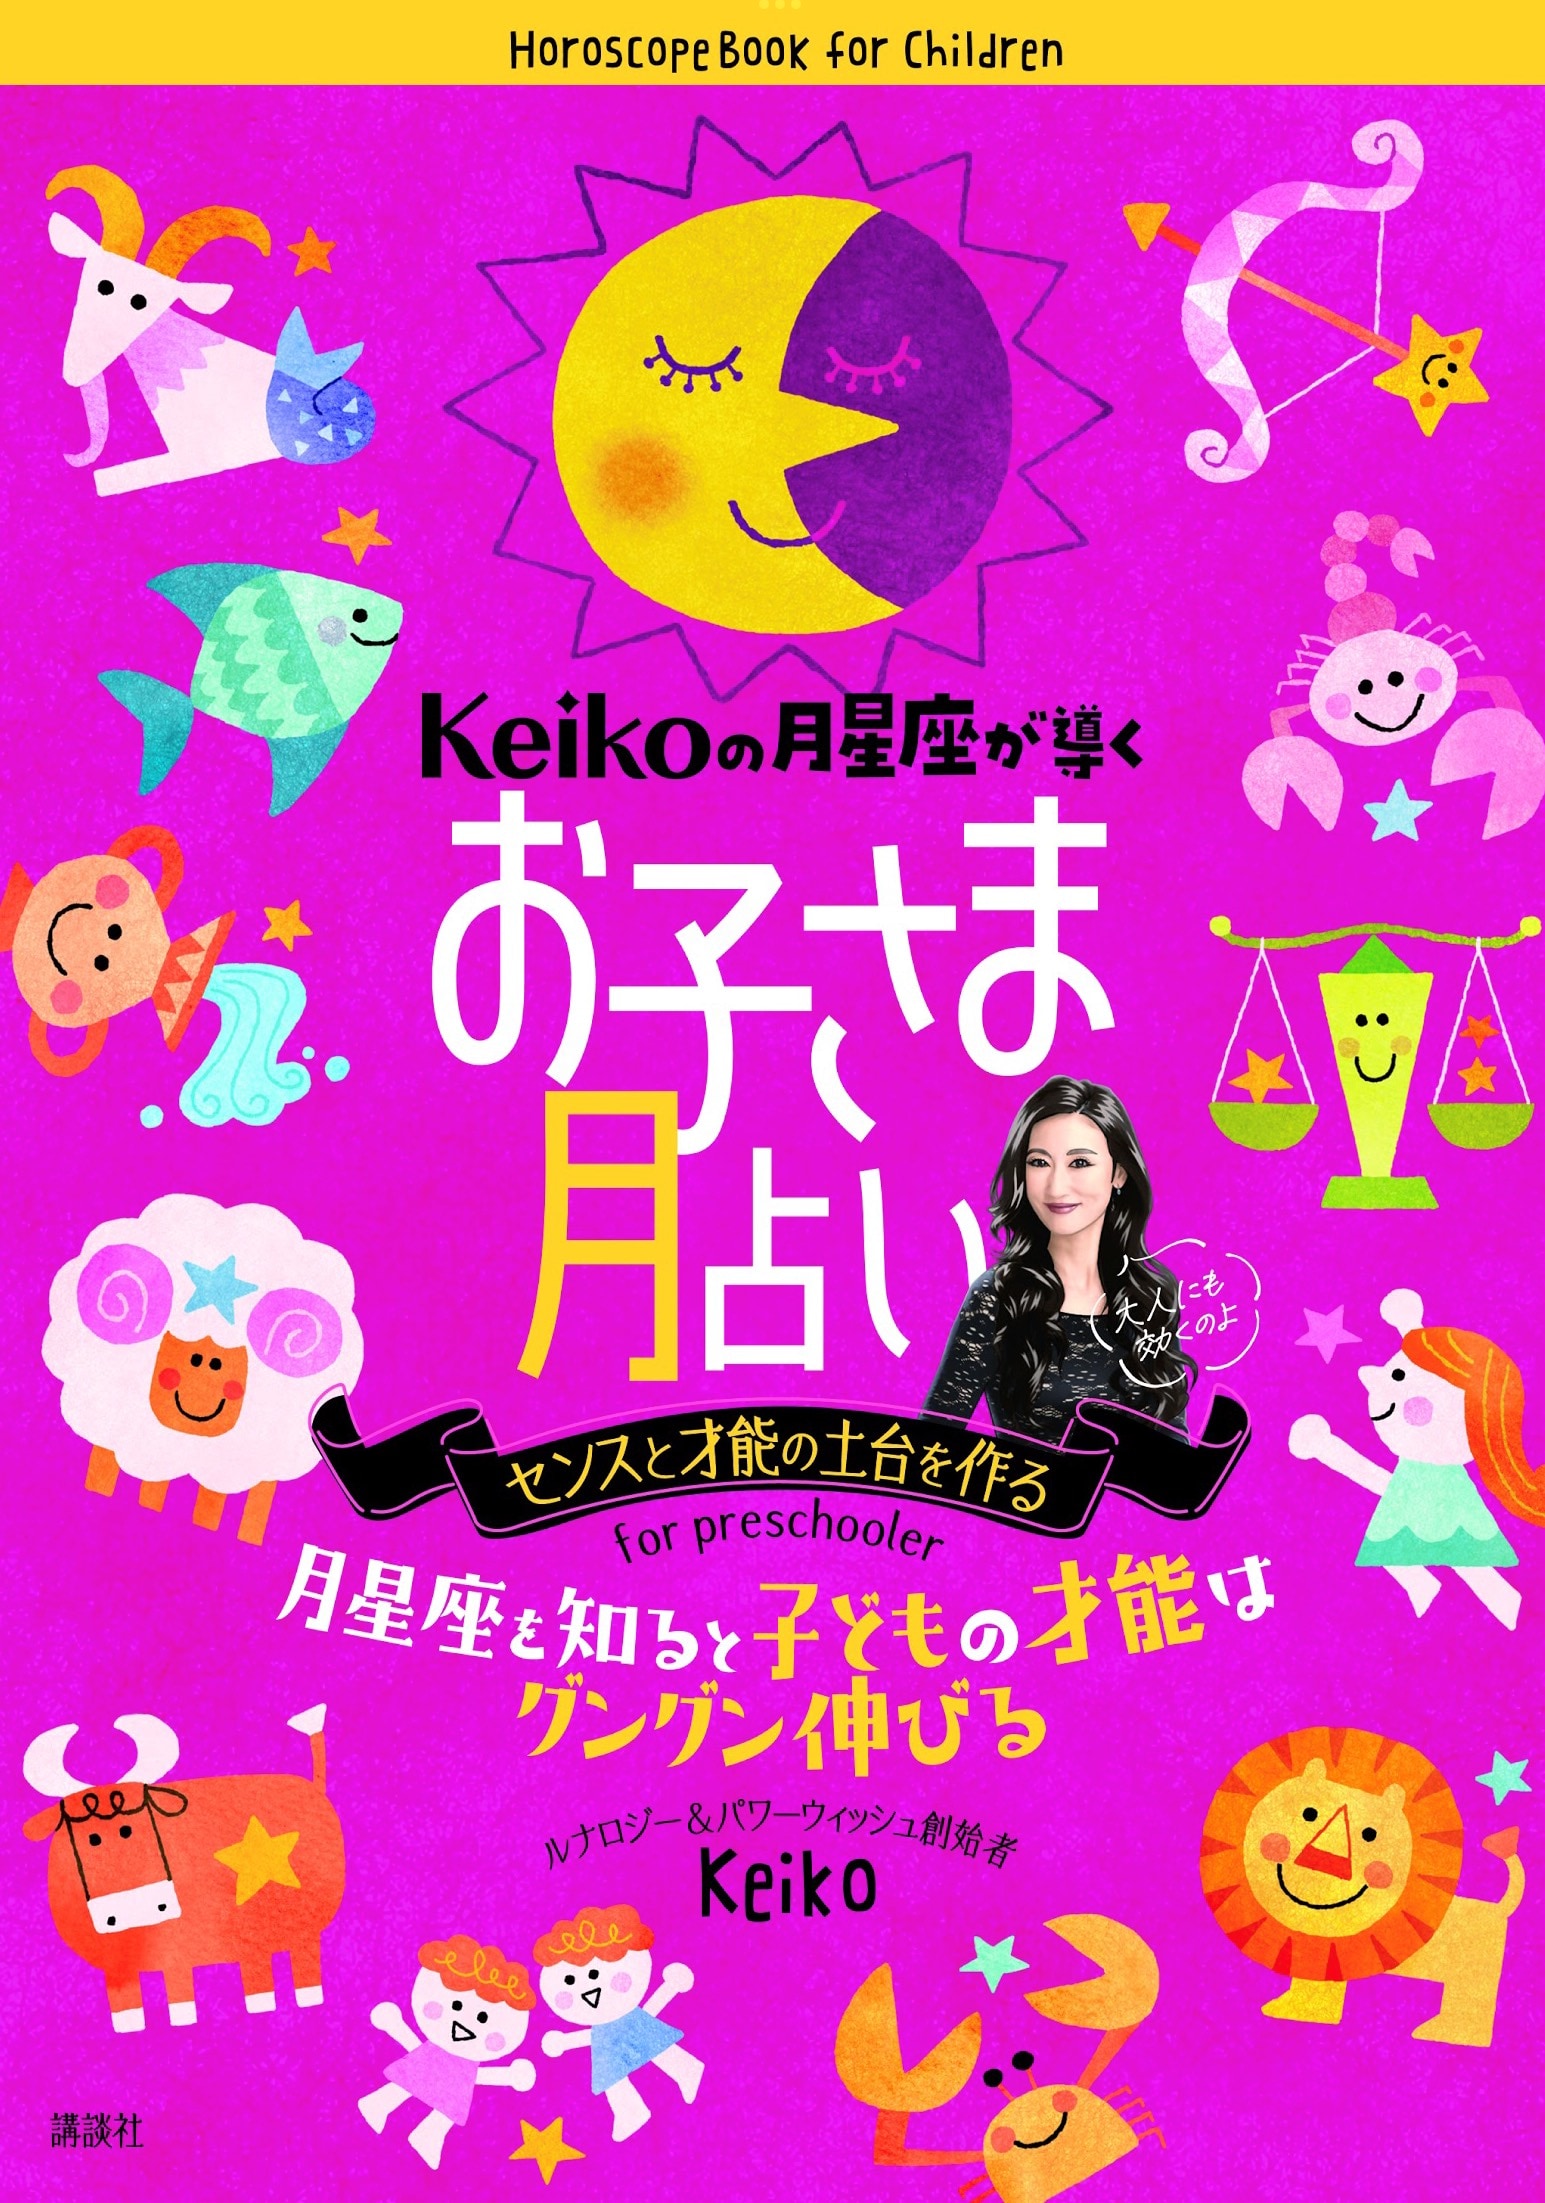 『 Keikoの月星座が導く お子さま月占い 』 性格の土台を作る0~7歳までは、じつは月星座が育児の最適な解説書。月星座の占星術家として著名なKeikoが、その子独自の生まれ持った嗜好やセンス・才能を月星座から導き出し、さらに最適な育児の方向性を指南します。大人自身の〝魂ケア〟としても活用度200%！　9/2発売。